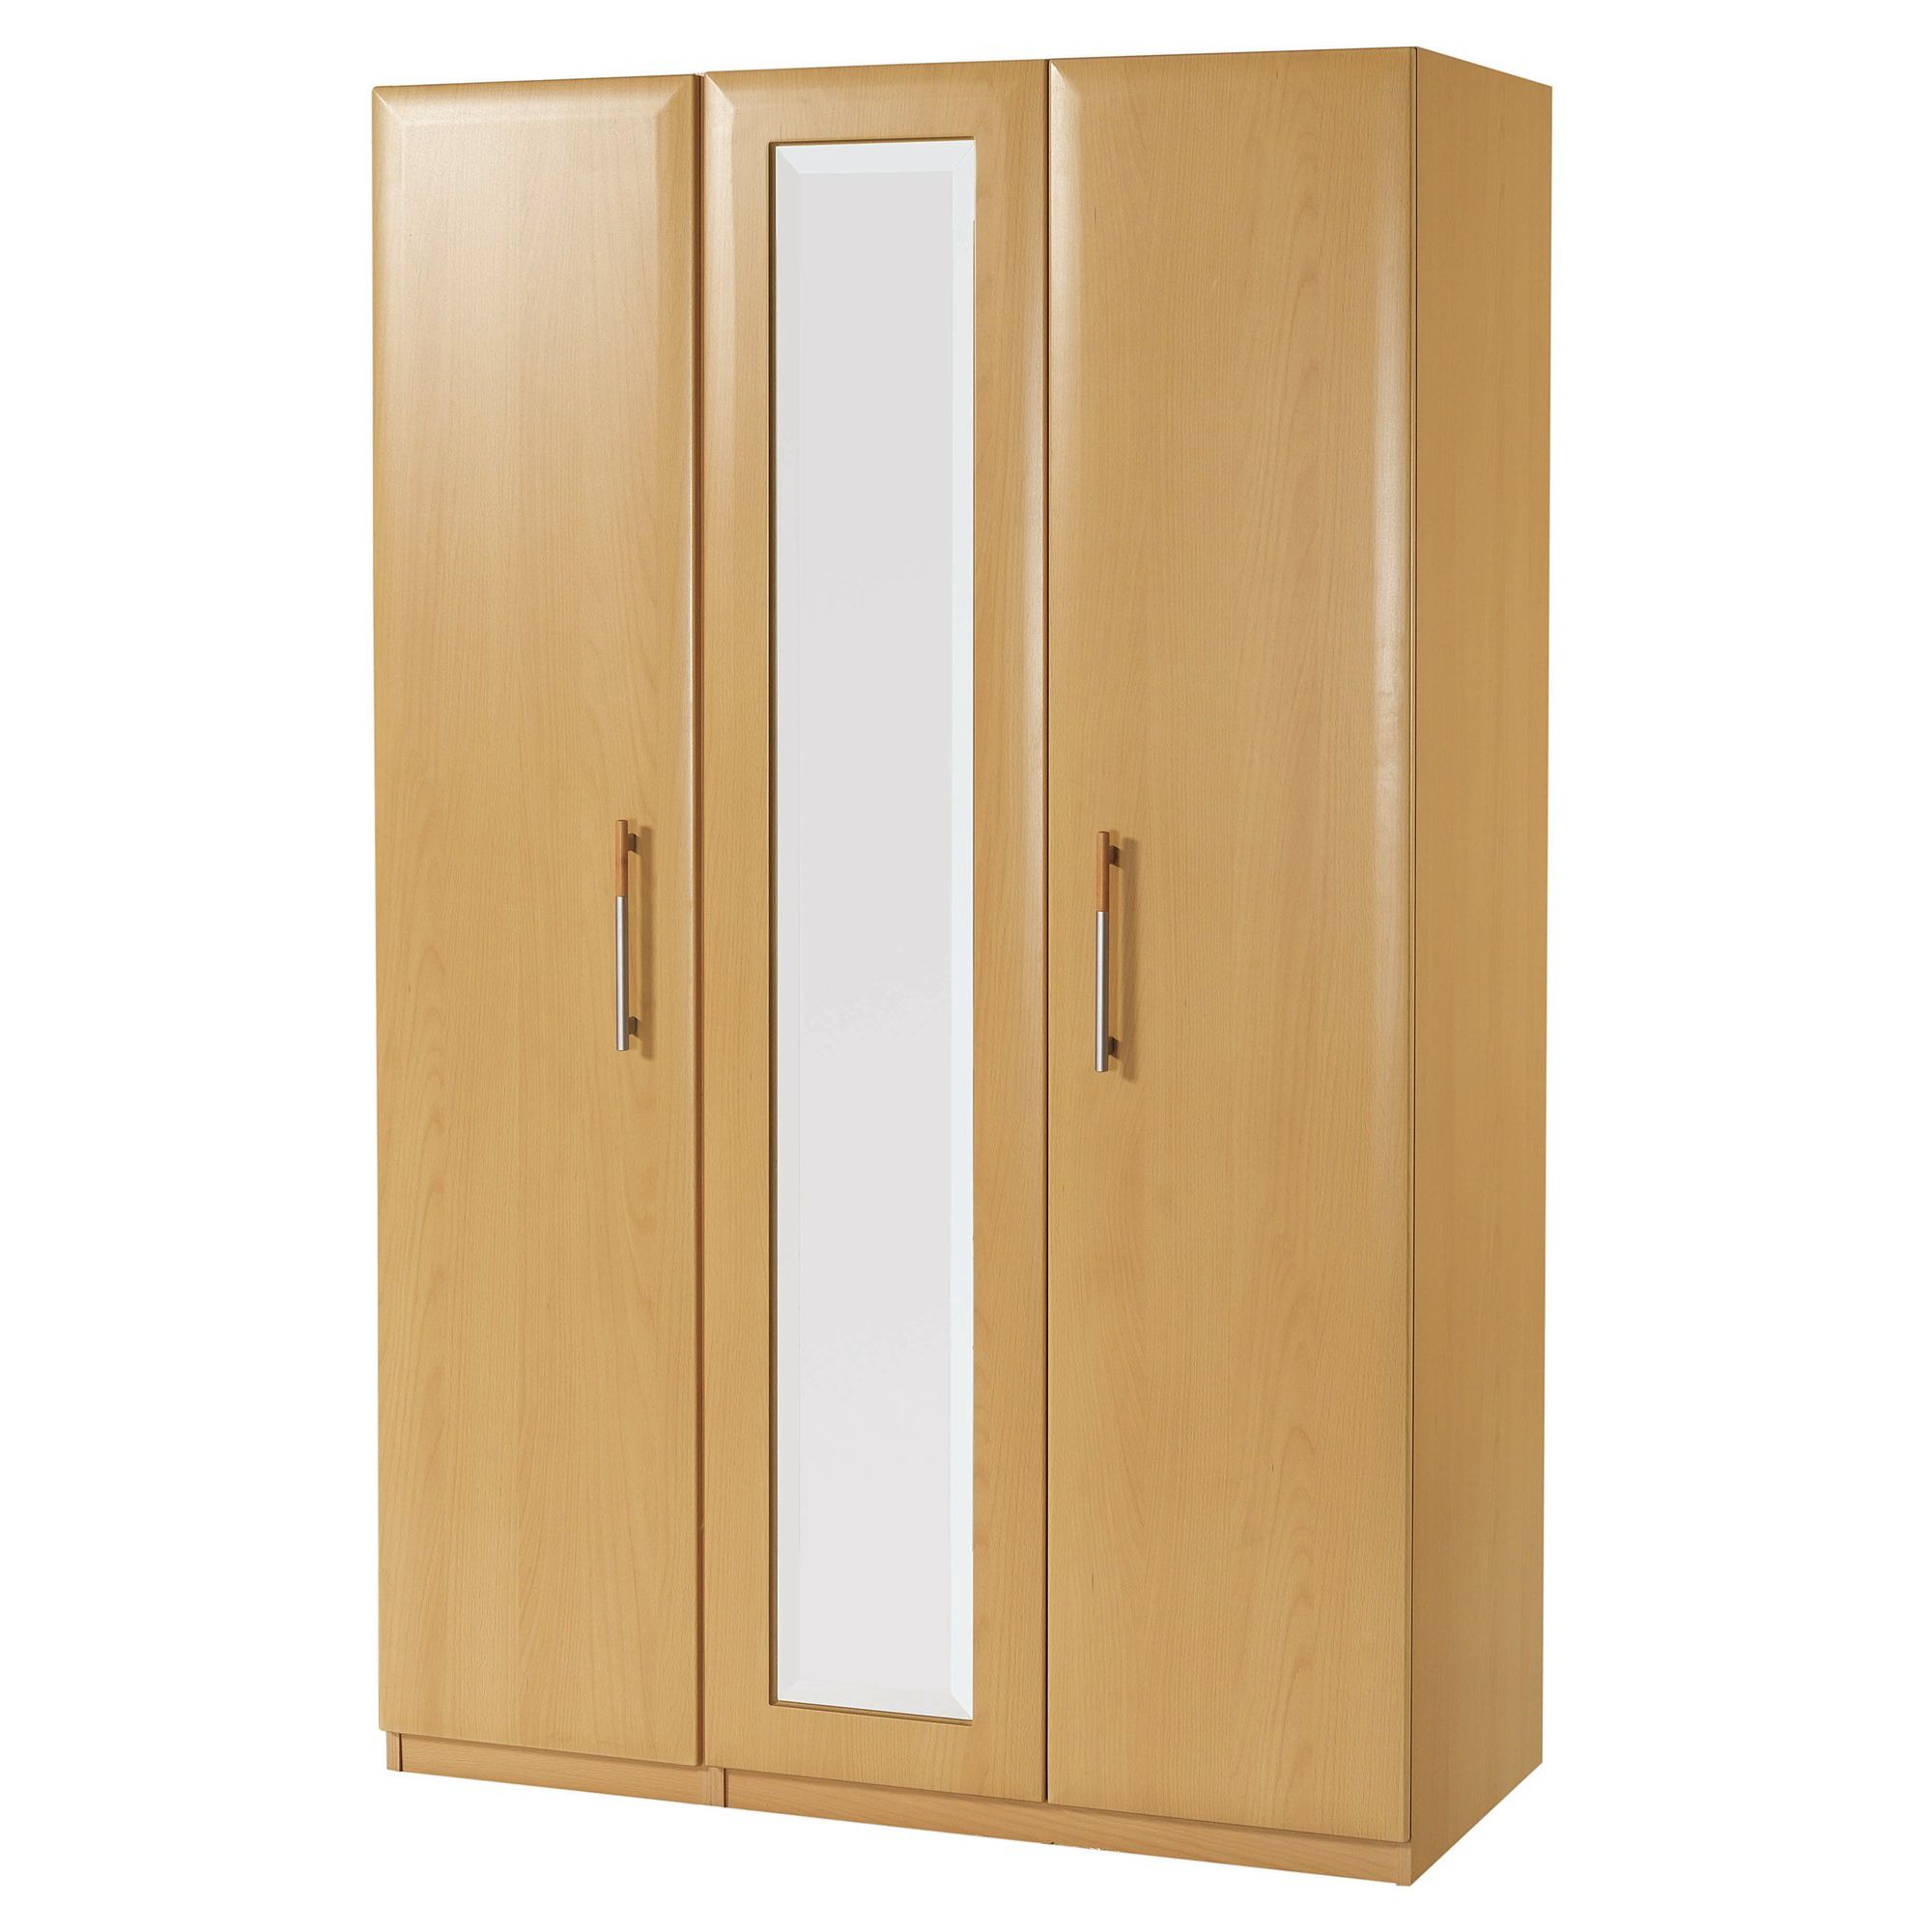 Alto Furniture Visualise Awake Three Door Wardrobe in Light Tyrolean Beech at Tesco Direct